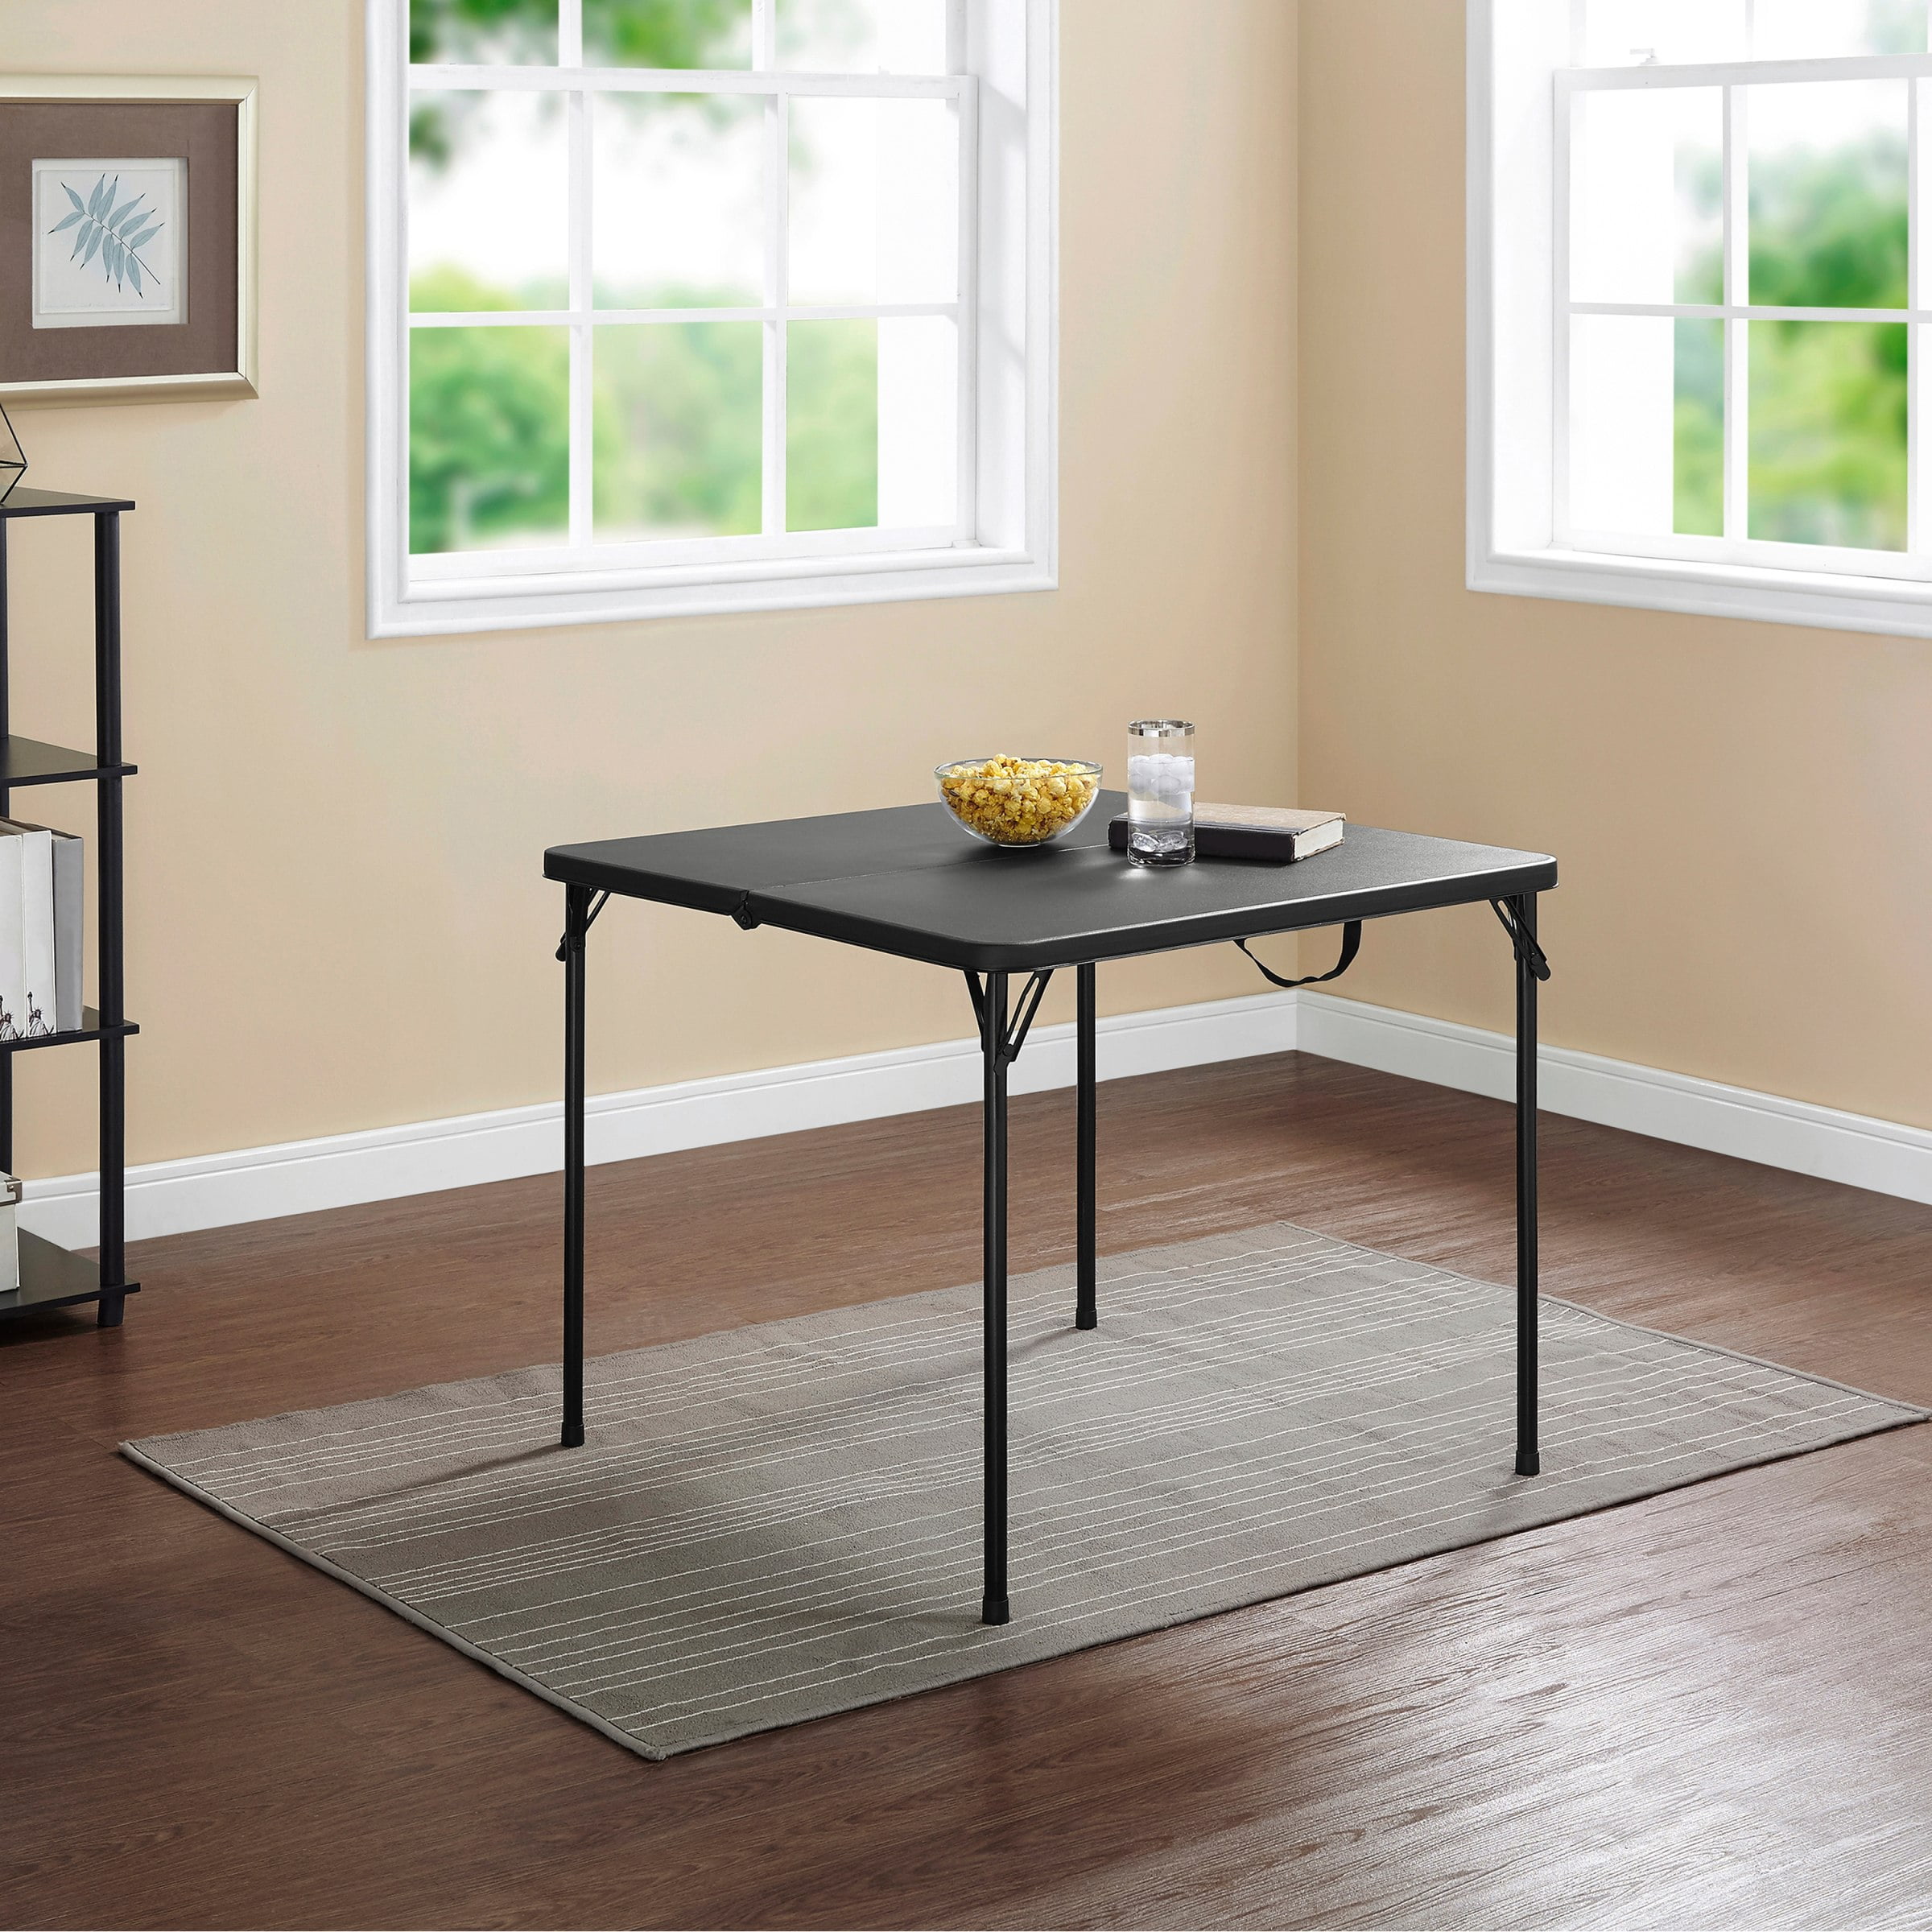 Mainstays 40L x 20W Plastic Adjustable Height Fold-in-Half Folding Table, Rich Black